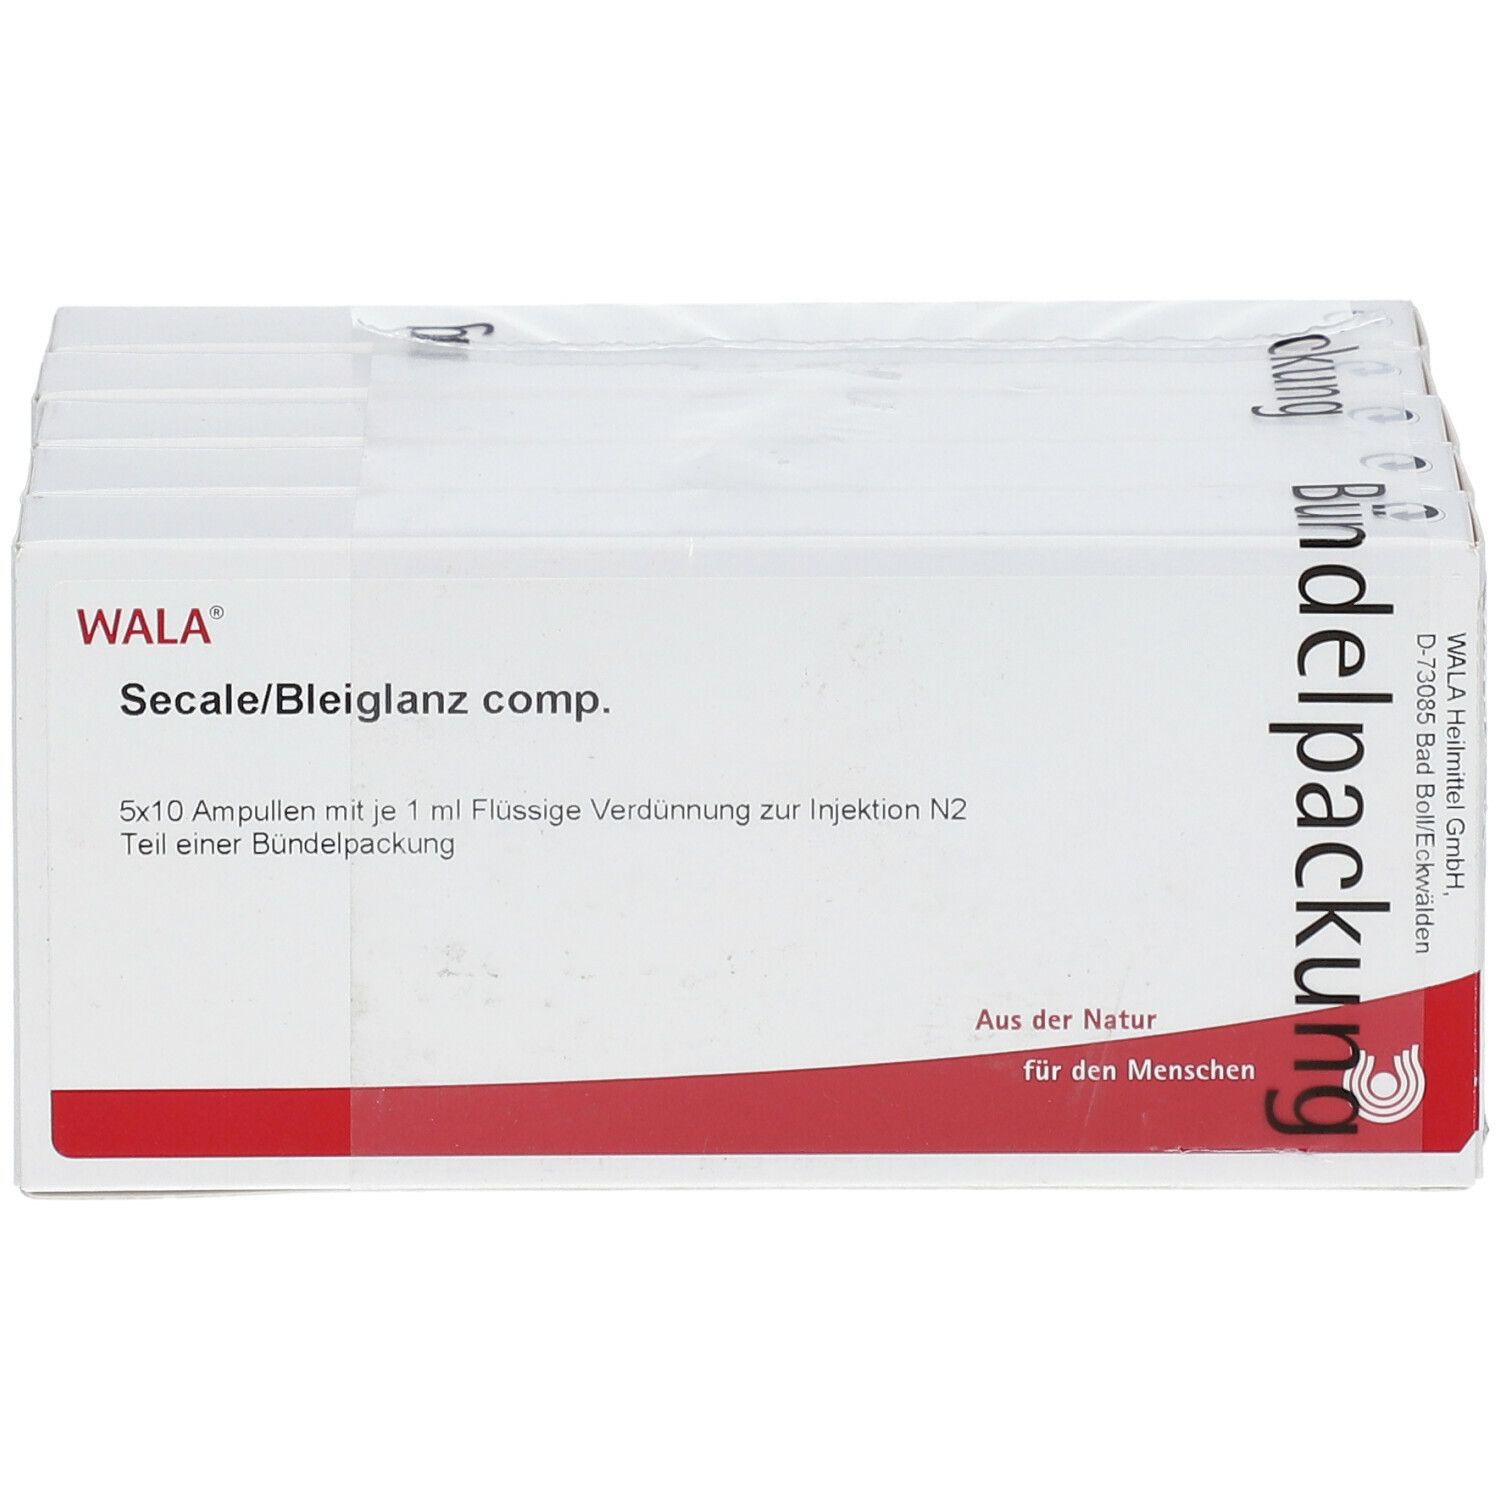 WALA® Secale Bleiglanz Comp. Amp.